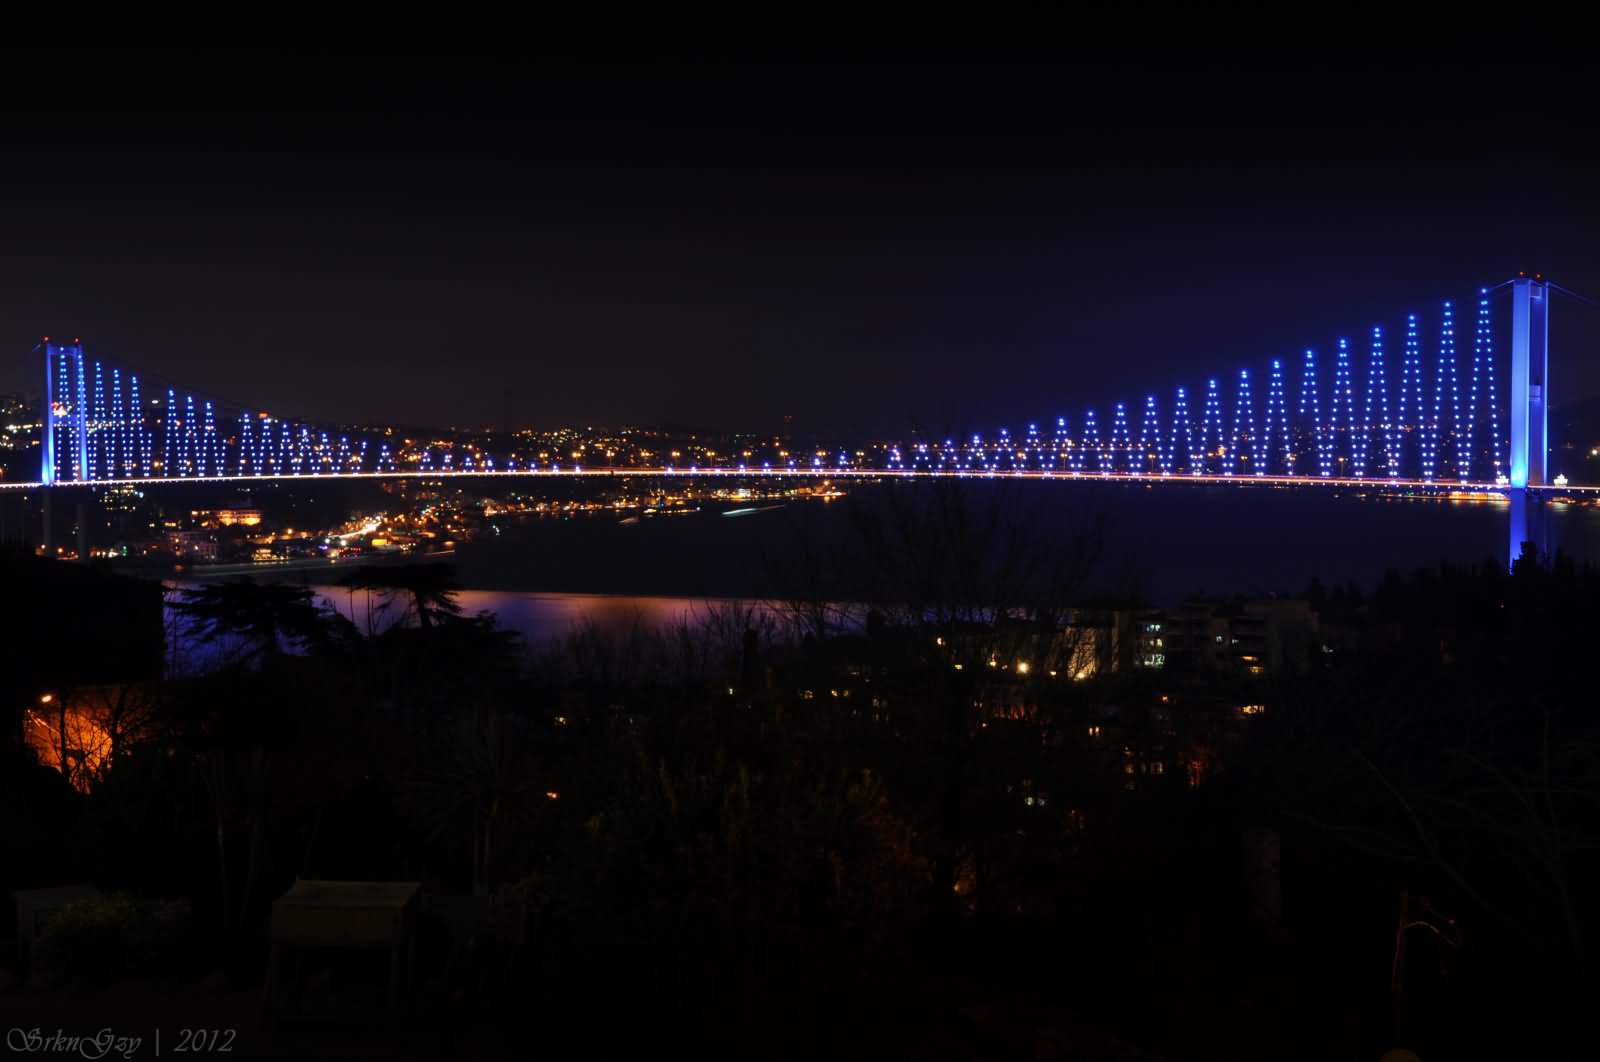 The Bosphorus Bridge At Night Image